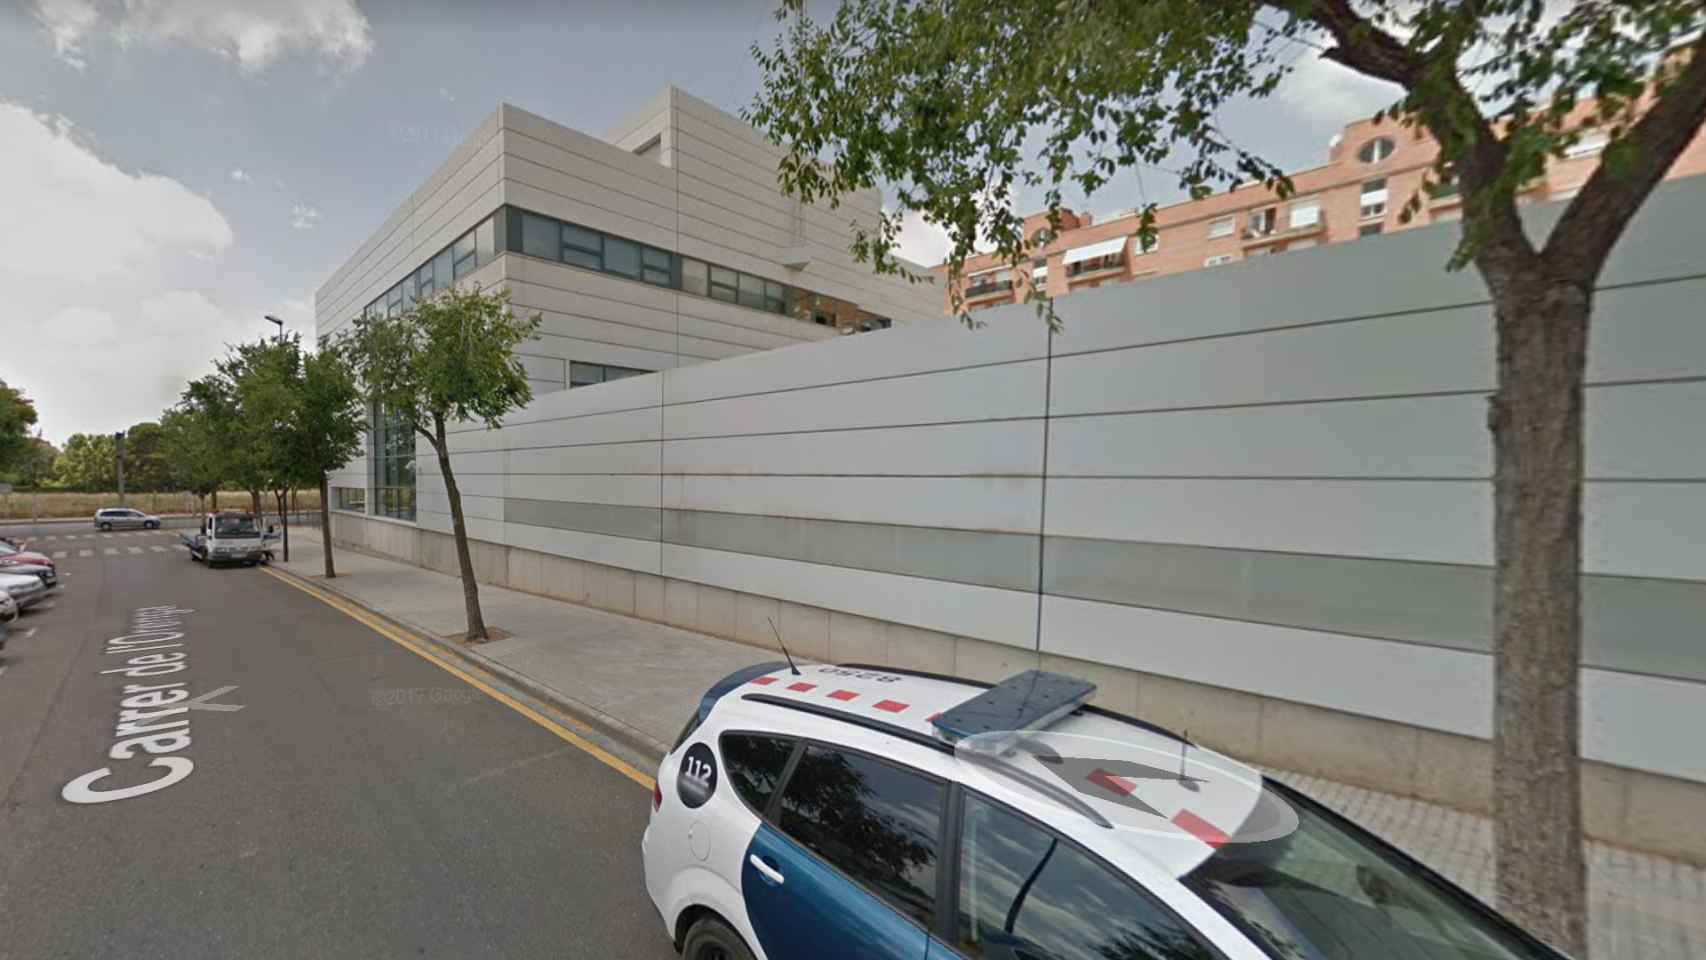 Comisaría de Mossos d'Esquadra de Reus (Tarragona)